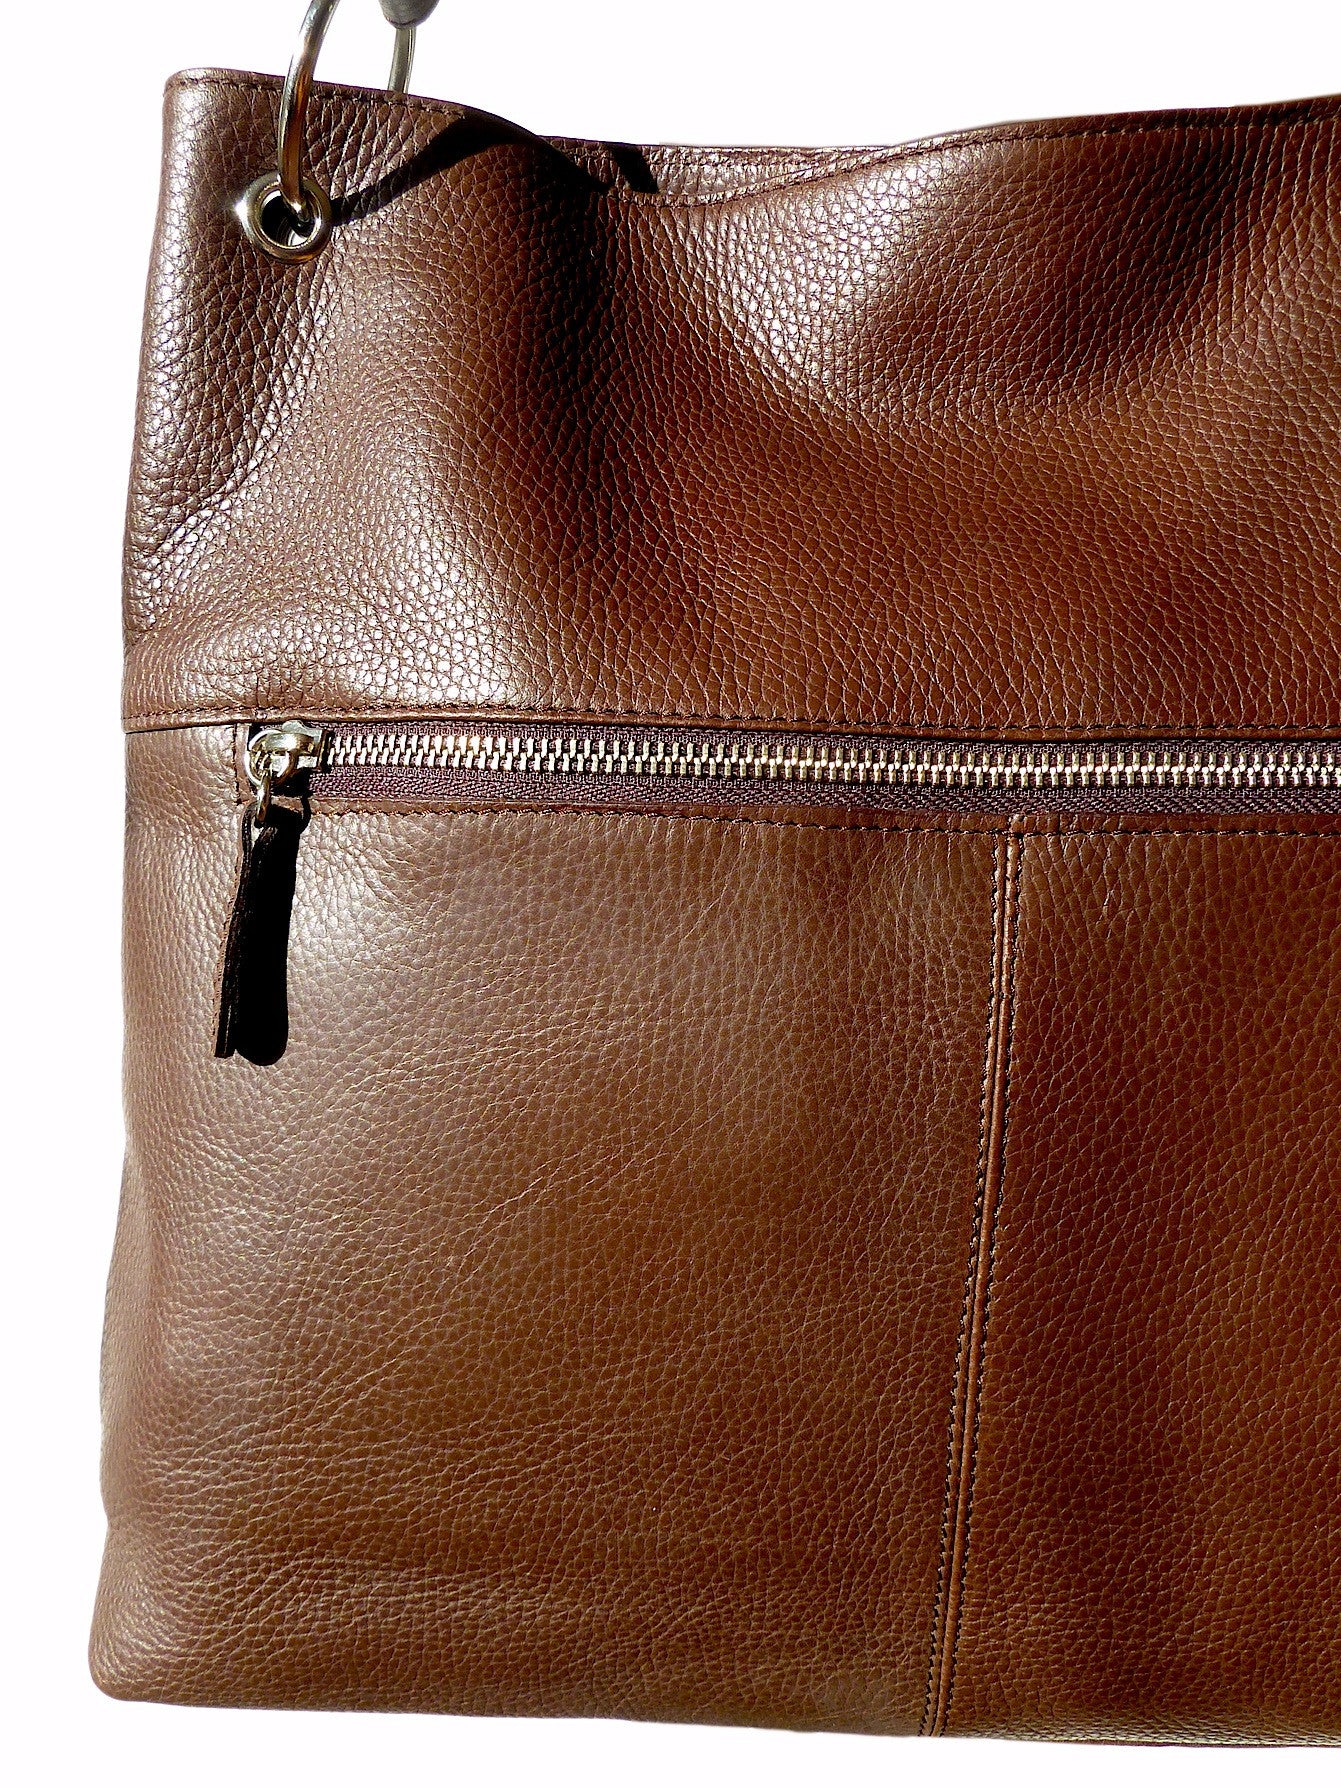 Gapock X Crossbody Bag Pebble Grain Leather Chocolate